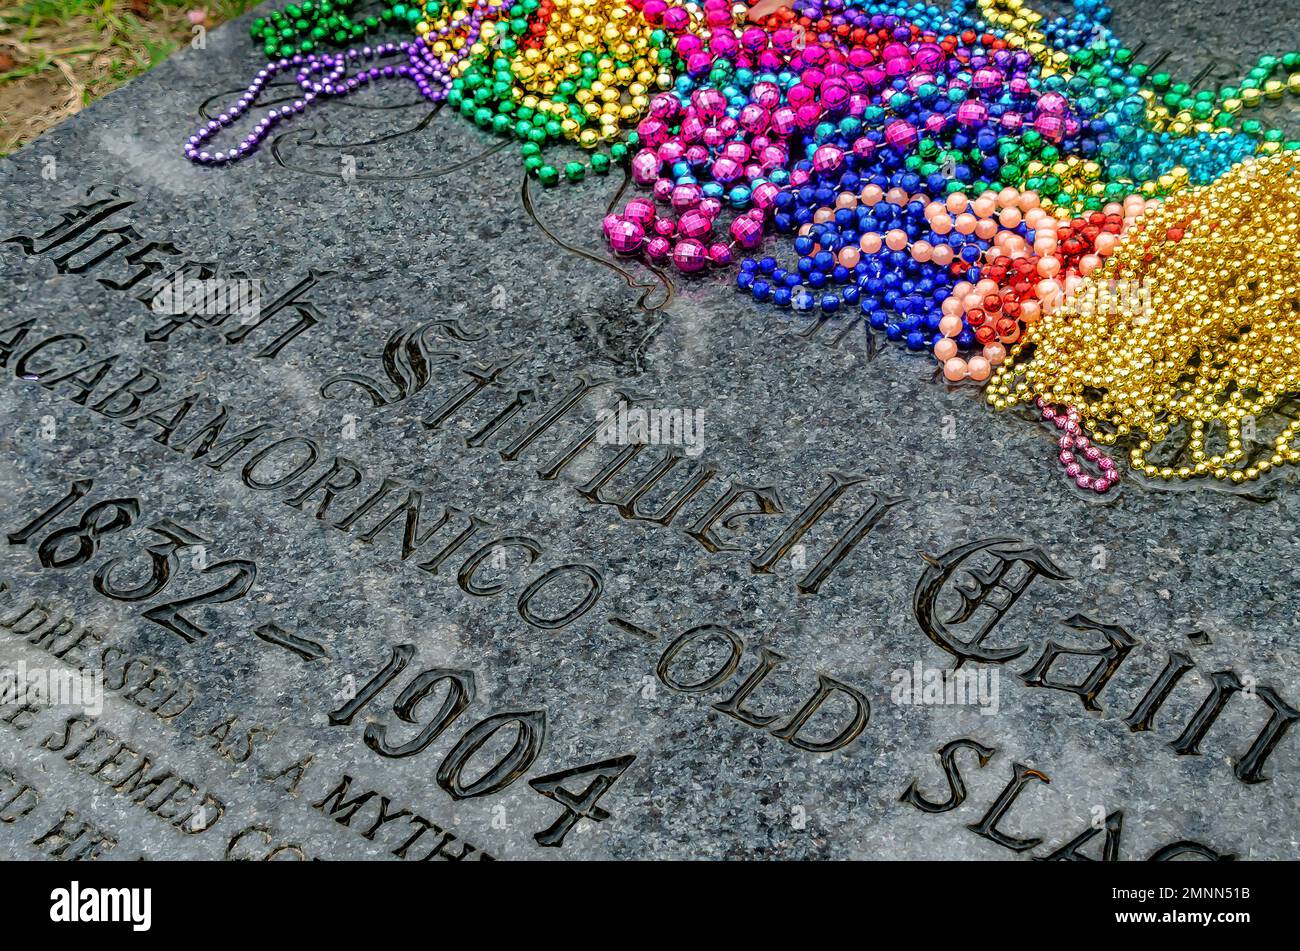 Mardi Gras beads are strewn across Joe Cain’s grave in Church Street Graveyard, Jan. 30, 2023, in Mobile, Alabama. Stock Photo